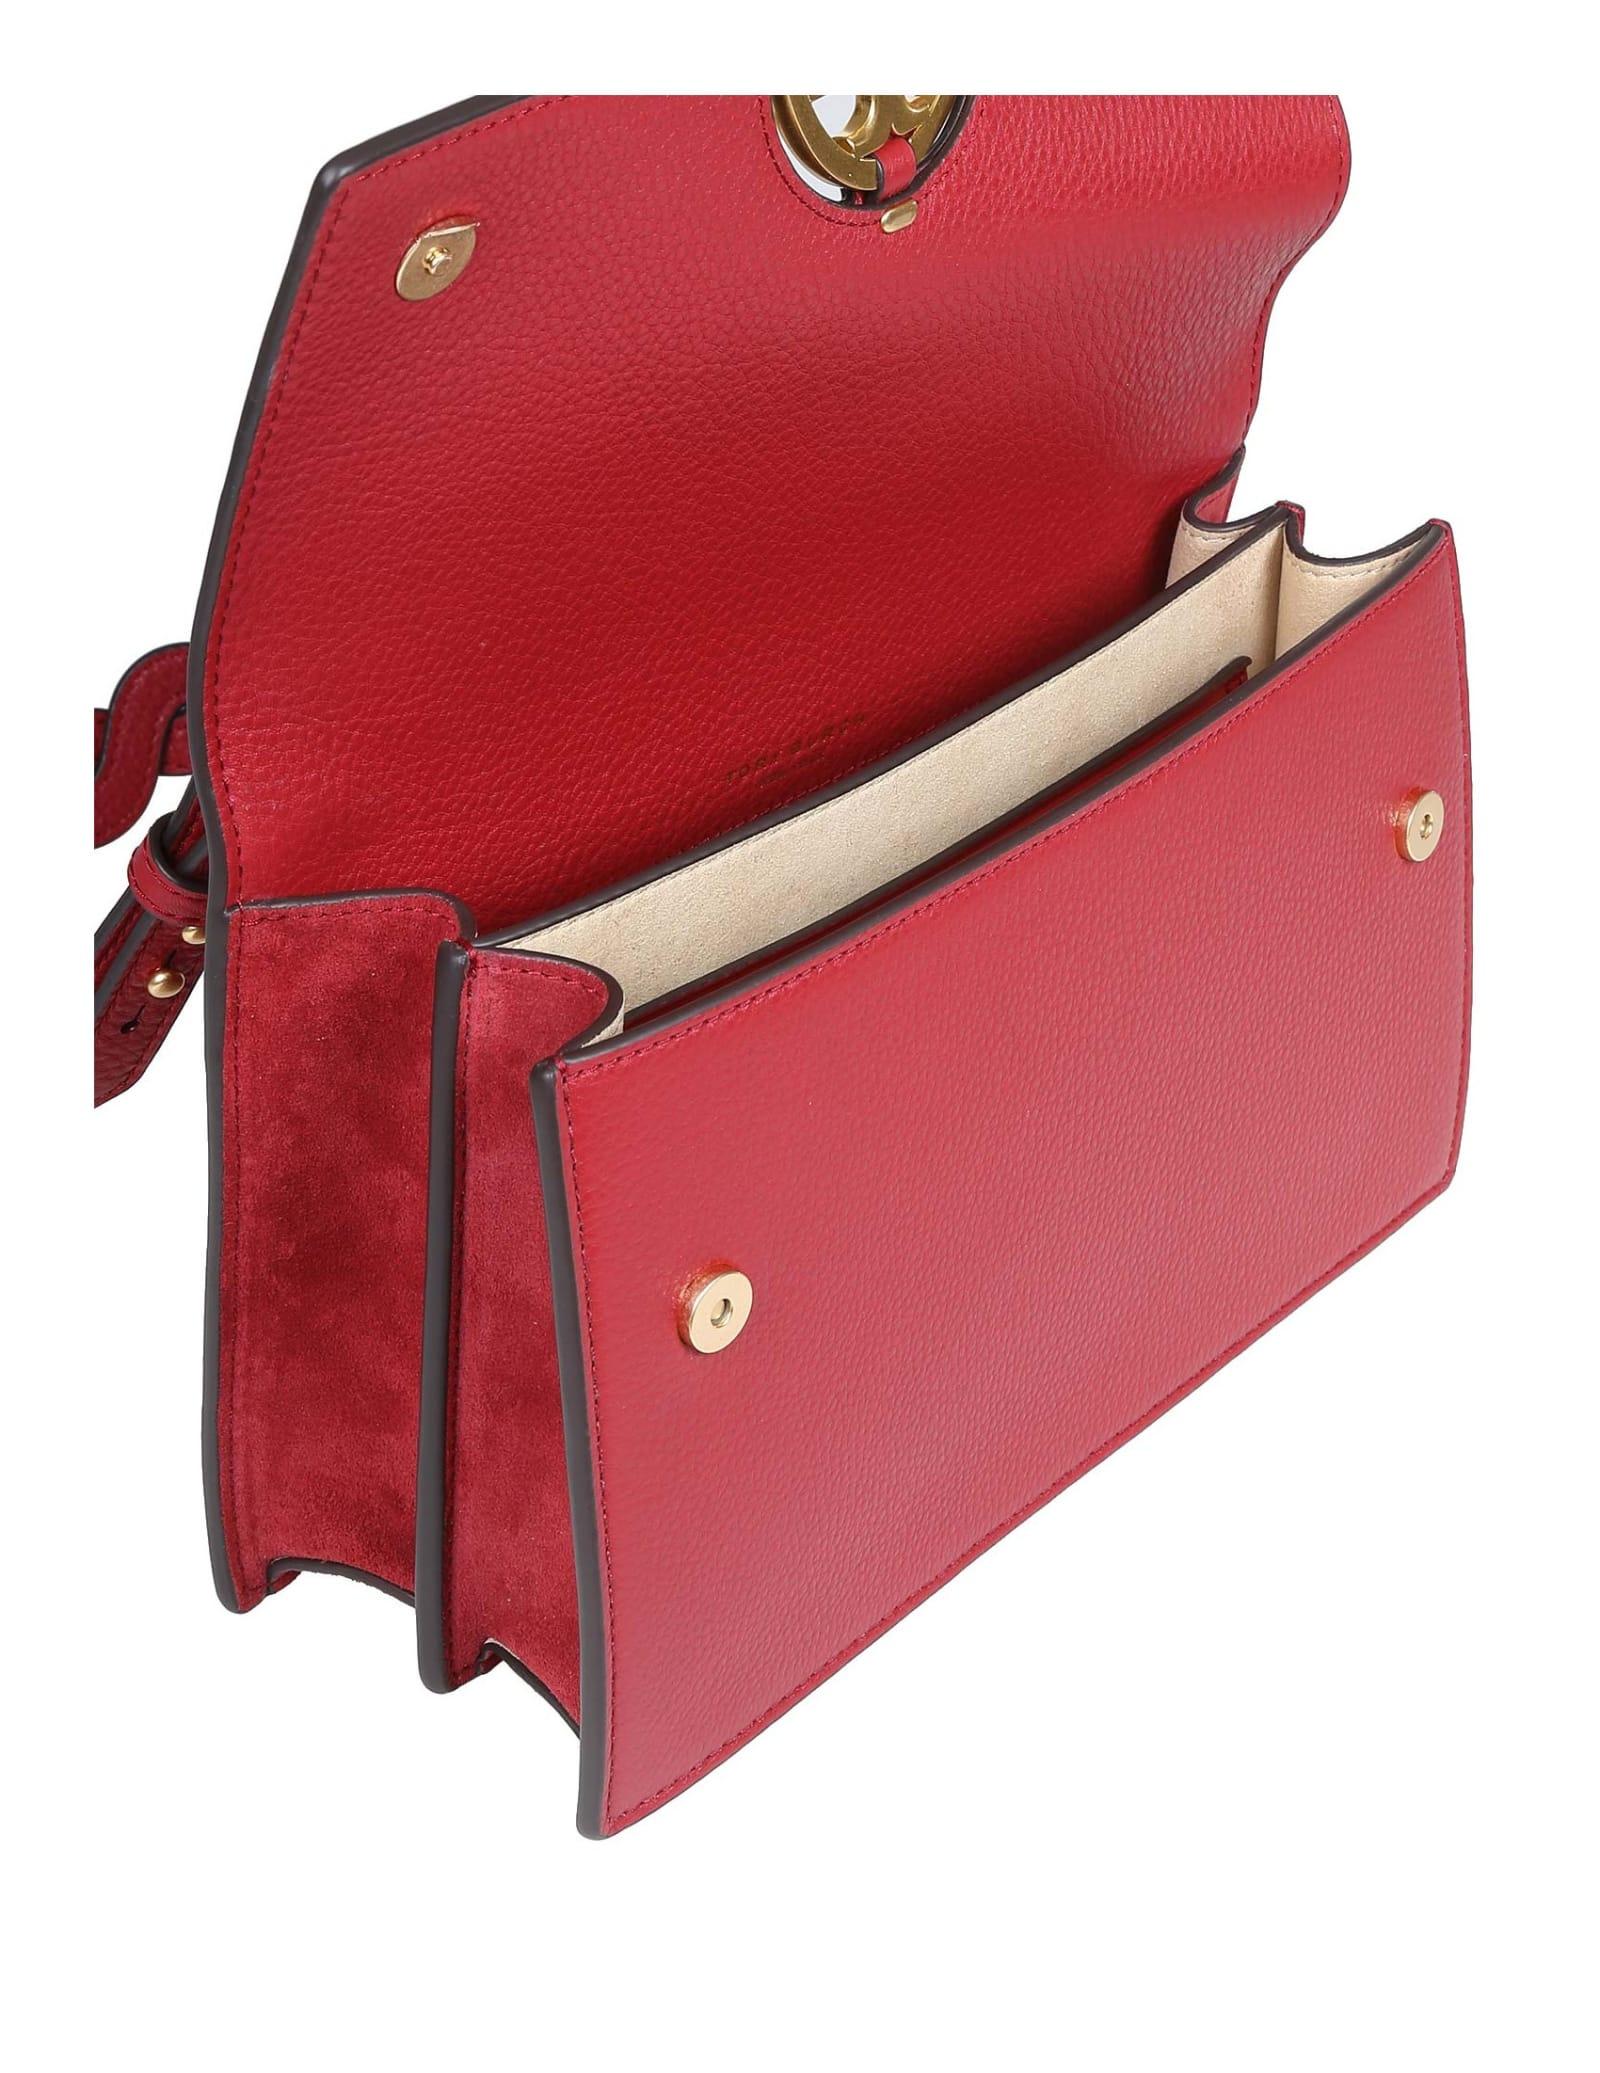 Tory Burch Red Leather Willa Small Drawstring Bucket Bag Shoulder Bag  7230-6 - Tory Burch bag - 192485824421